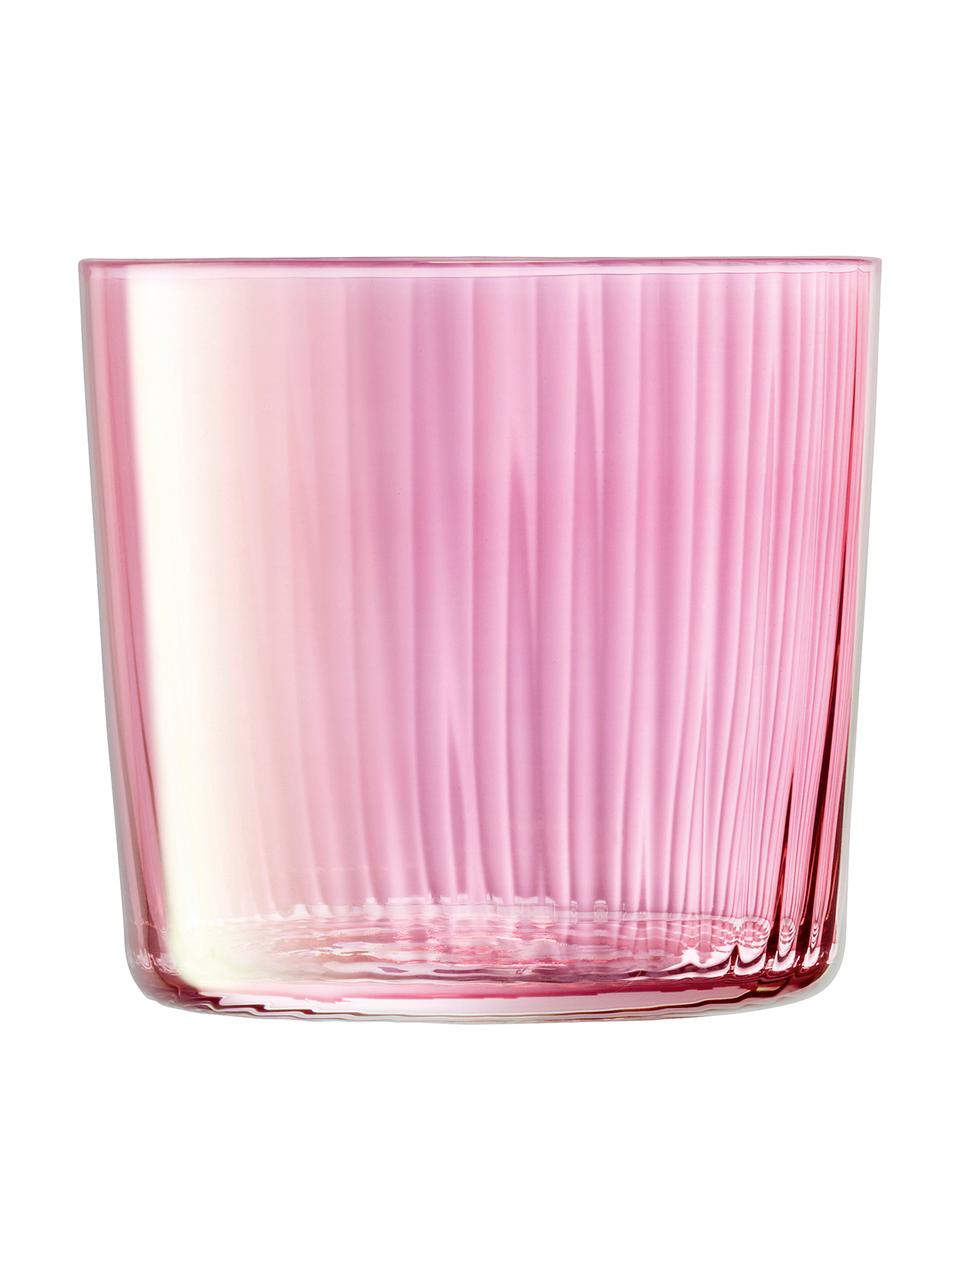 Sada ručně foukaných sklenic s reliéfem Gems, 4 díly, Foukané sklo, Odstíny růžové a fialové, Ø 8 cm, V 7 cm, 300 ml